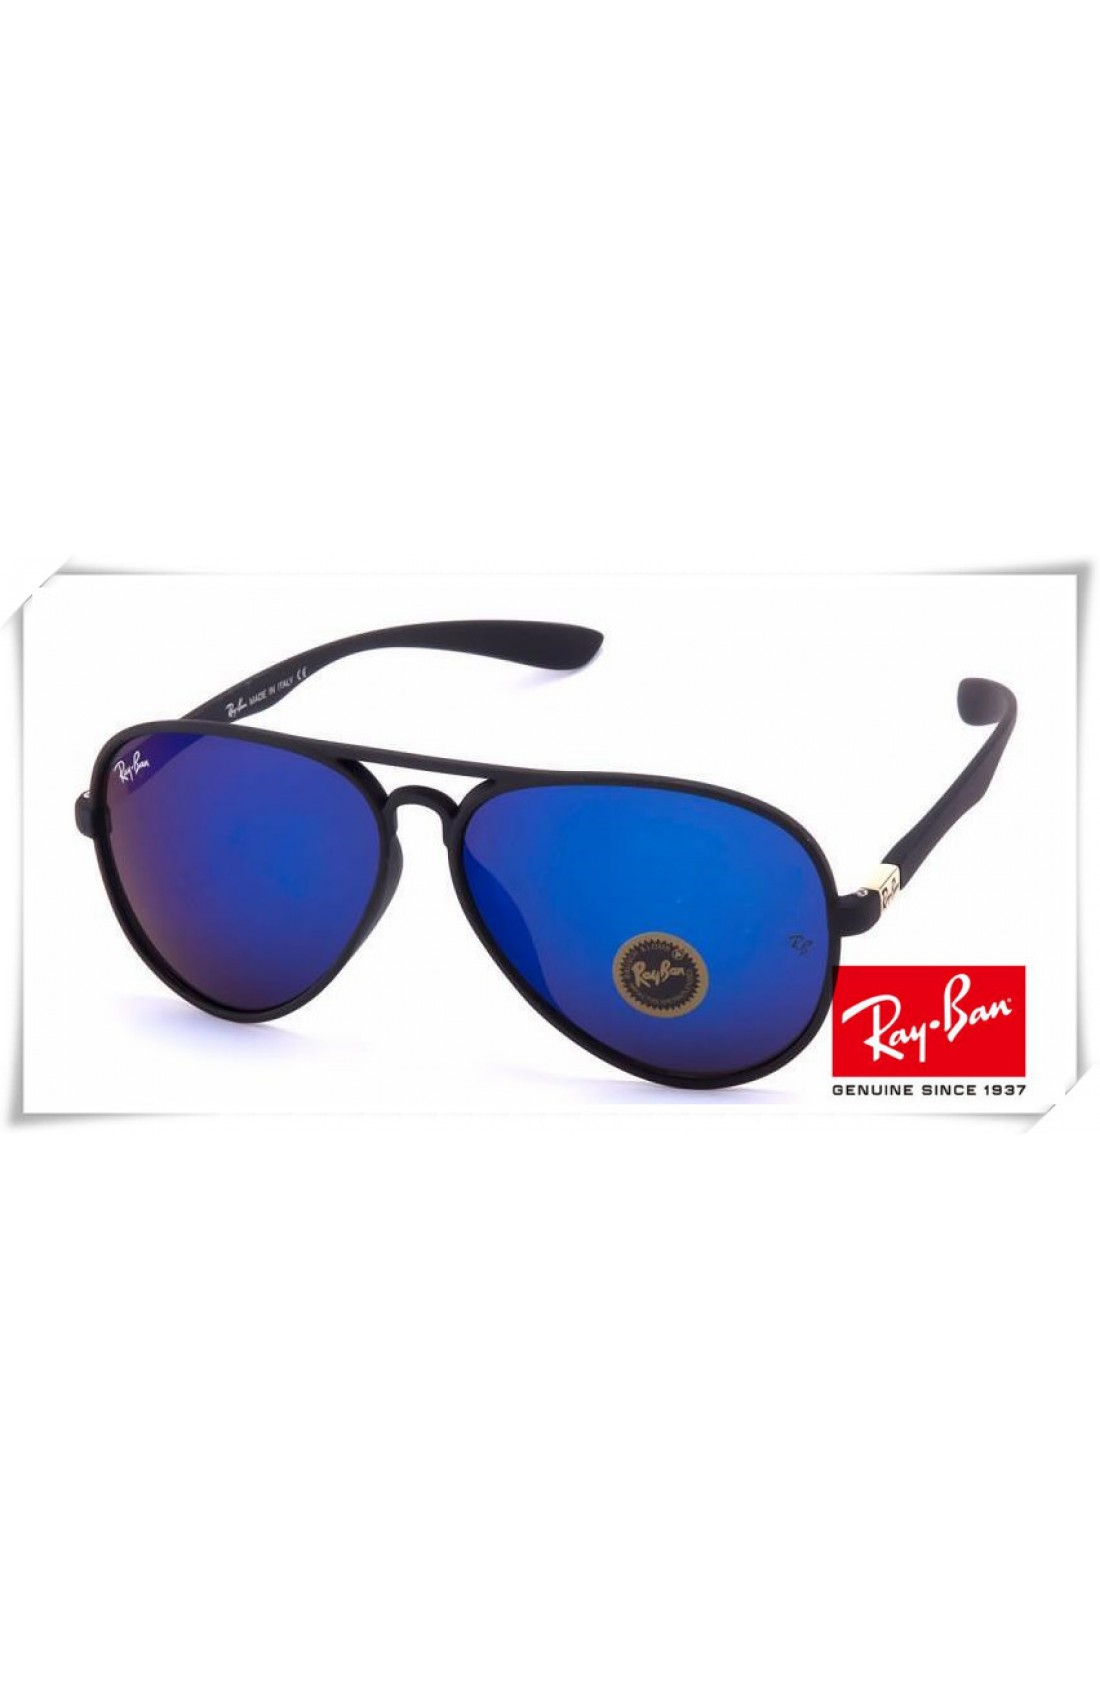 ray ban thermoplastic aviator sunglasses